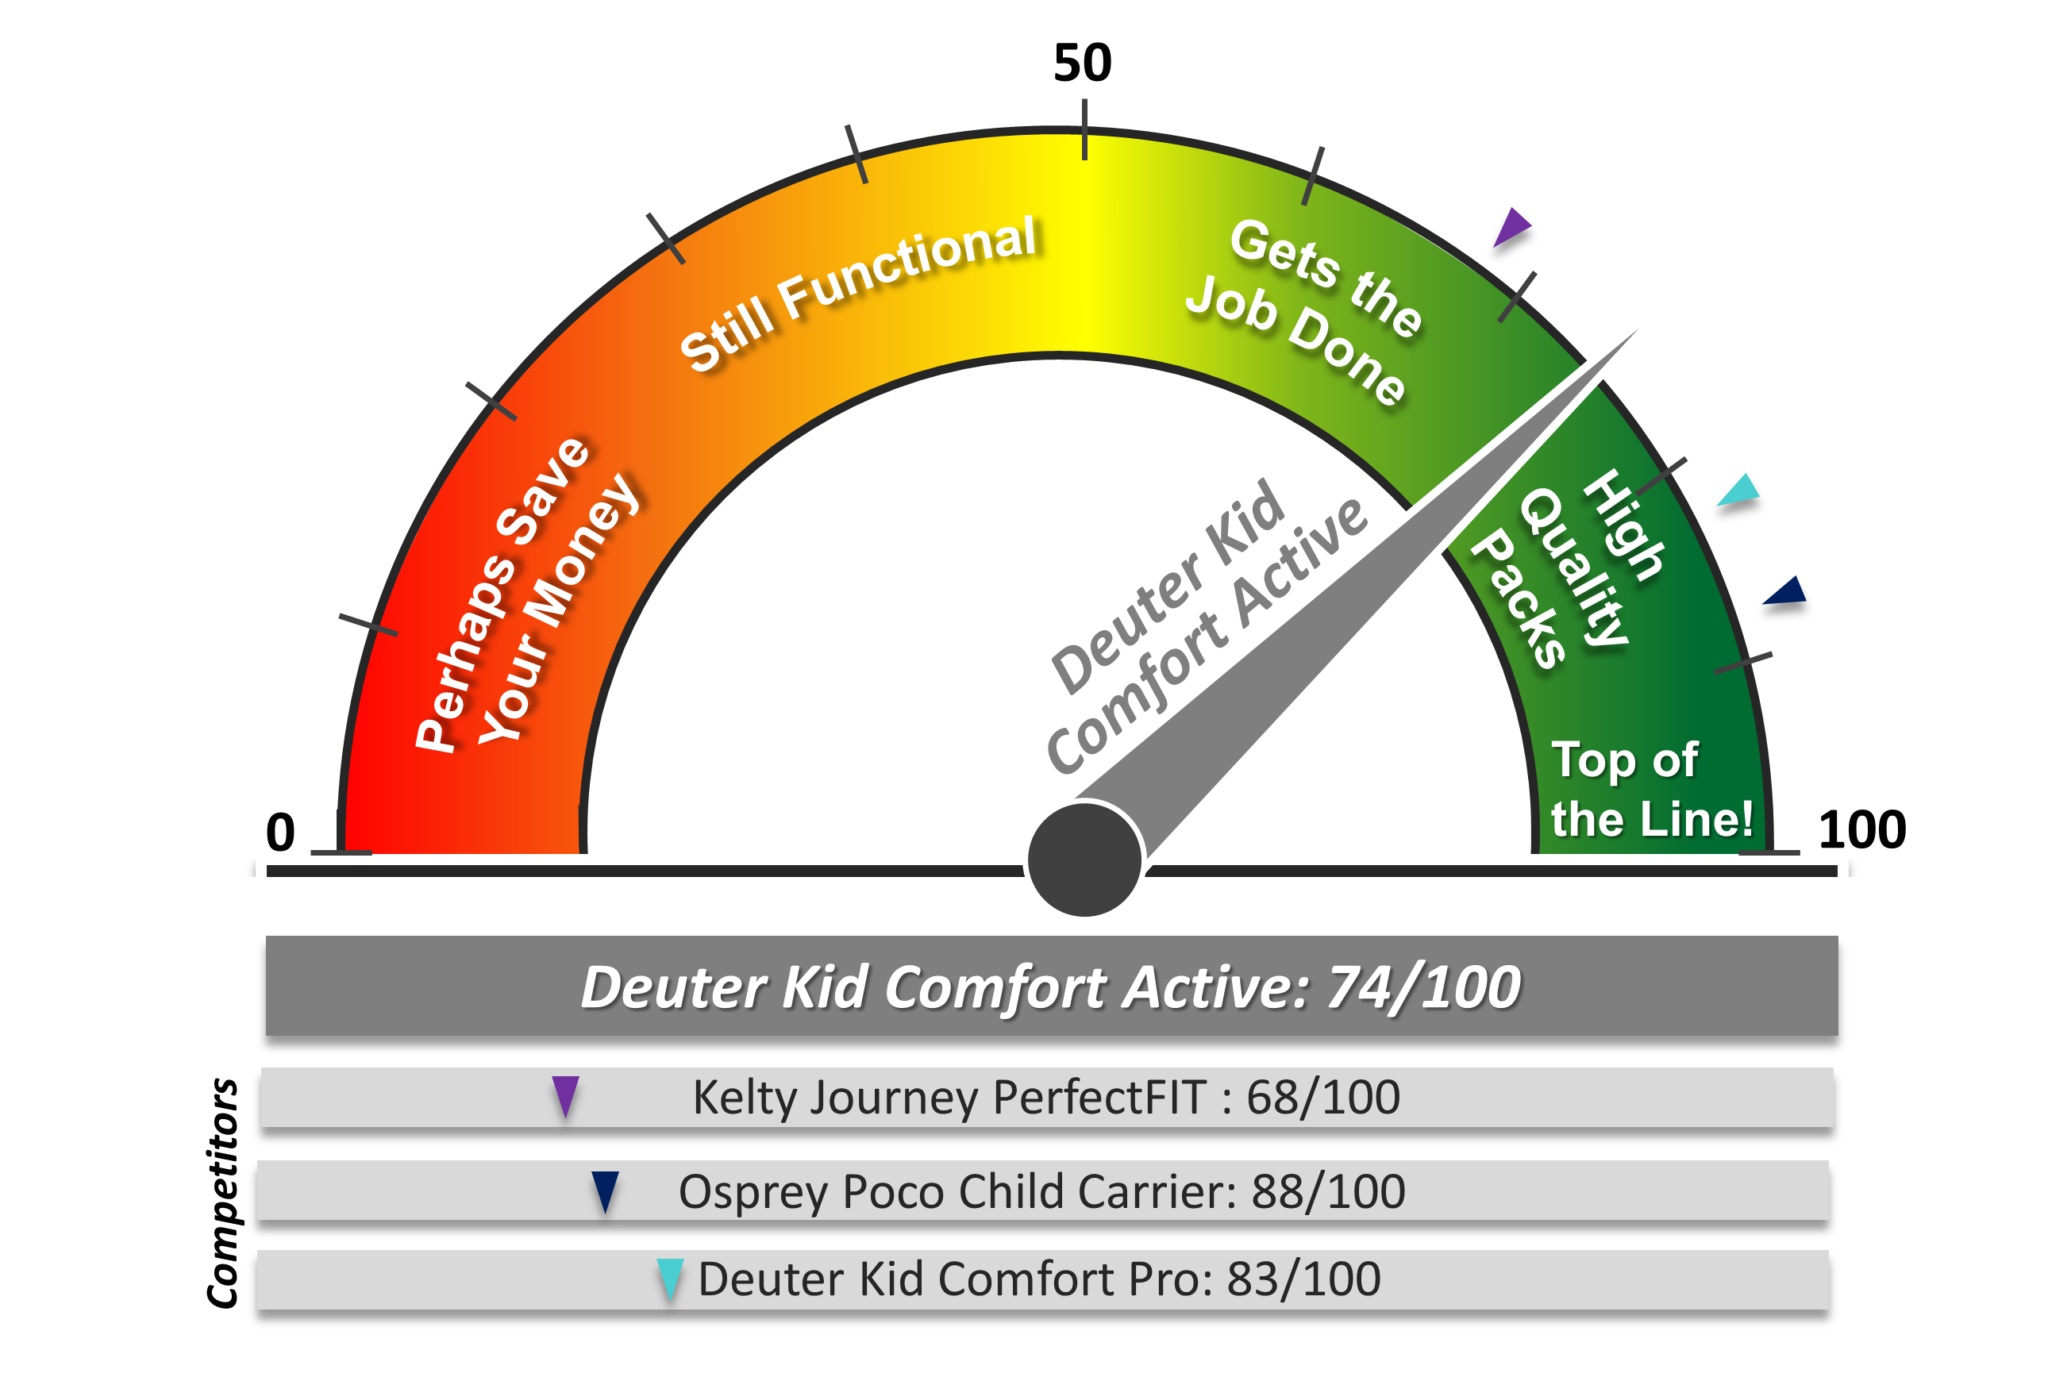 Deuter Kid Comfort Active Scoring Dial for overall rating